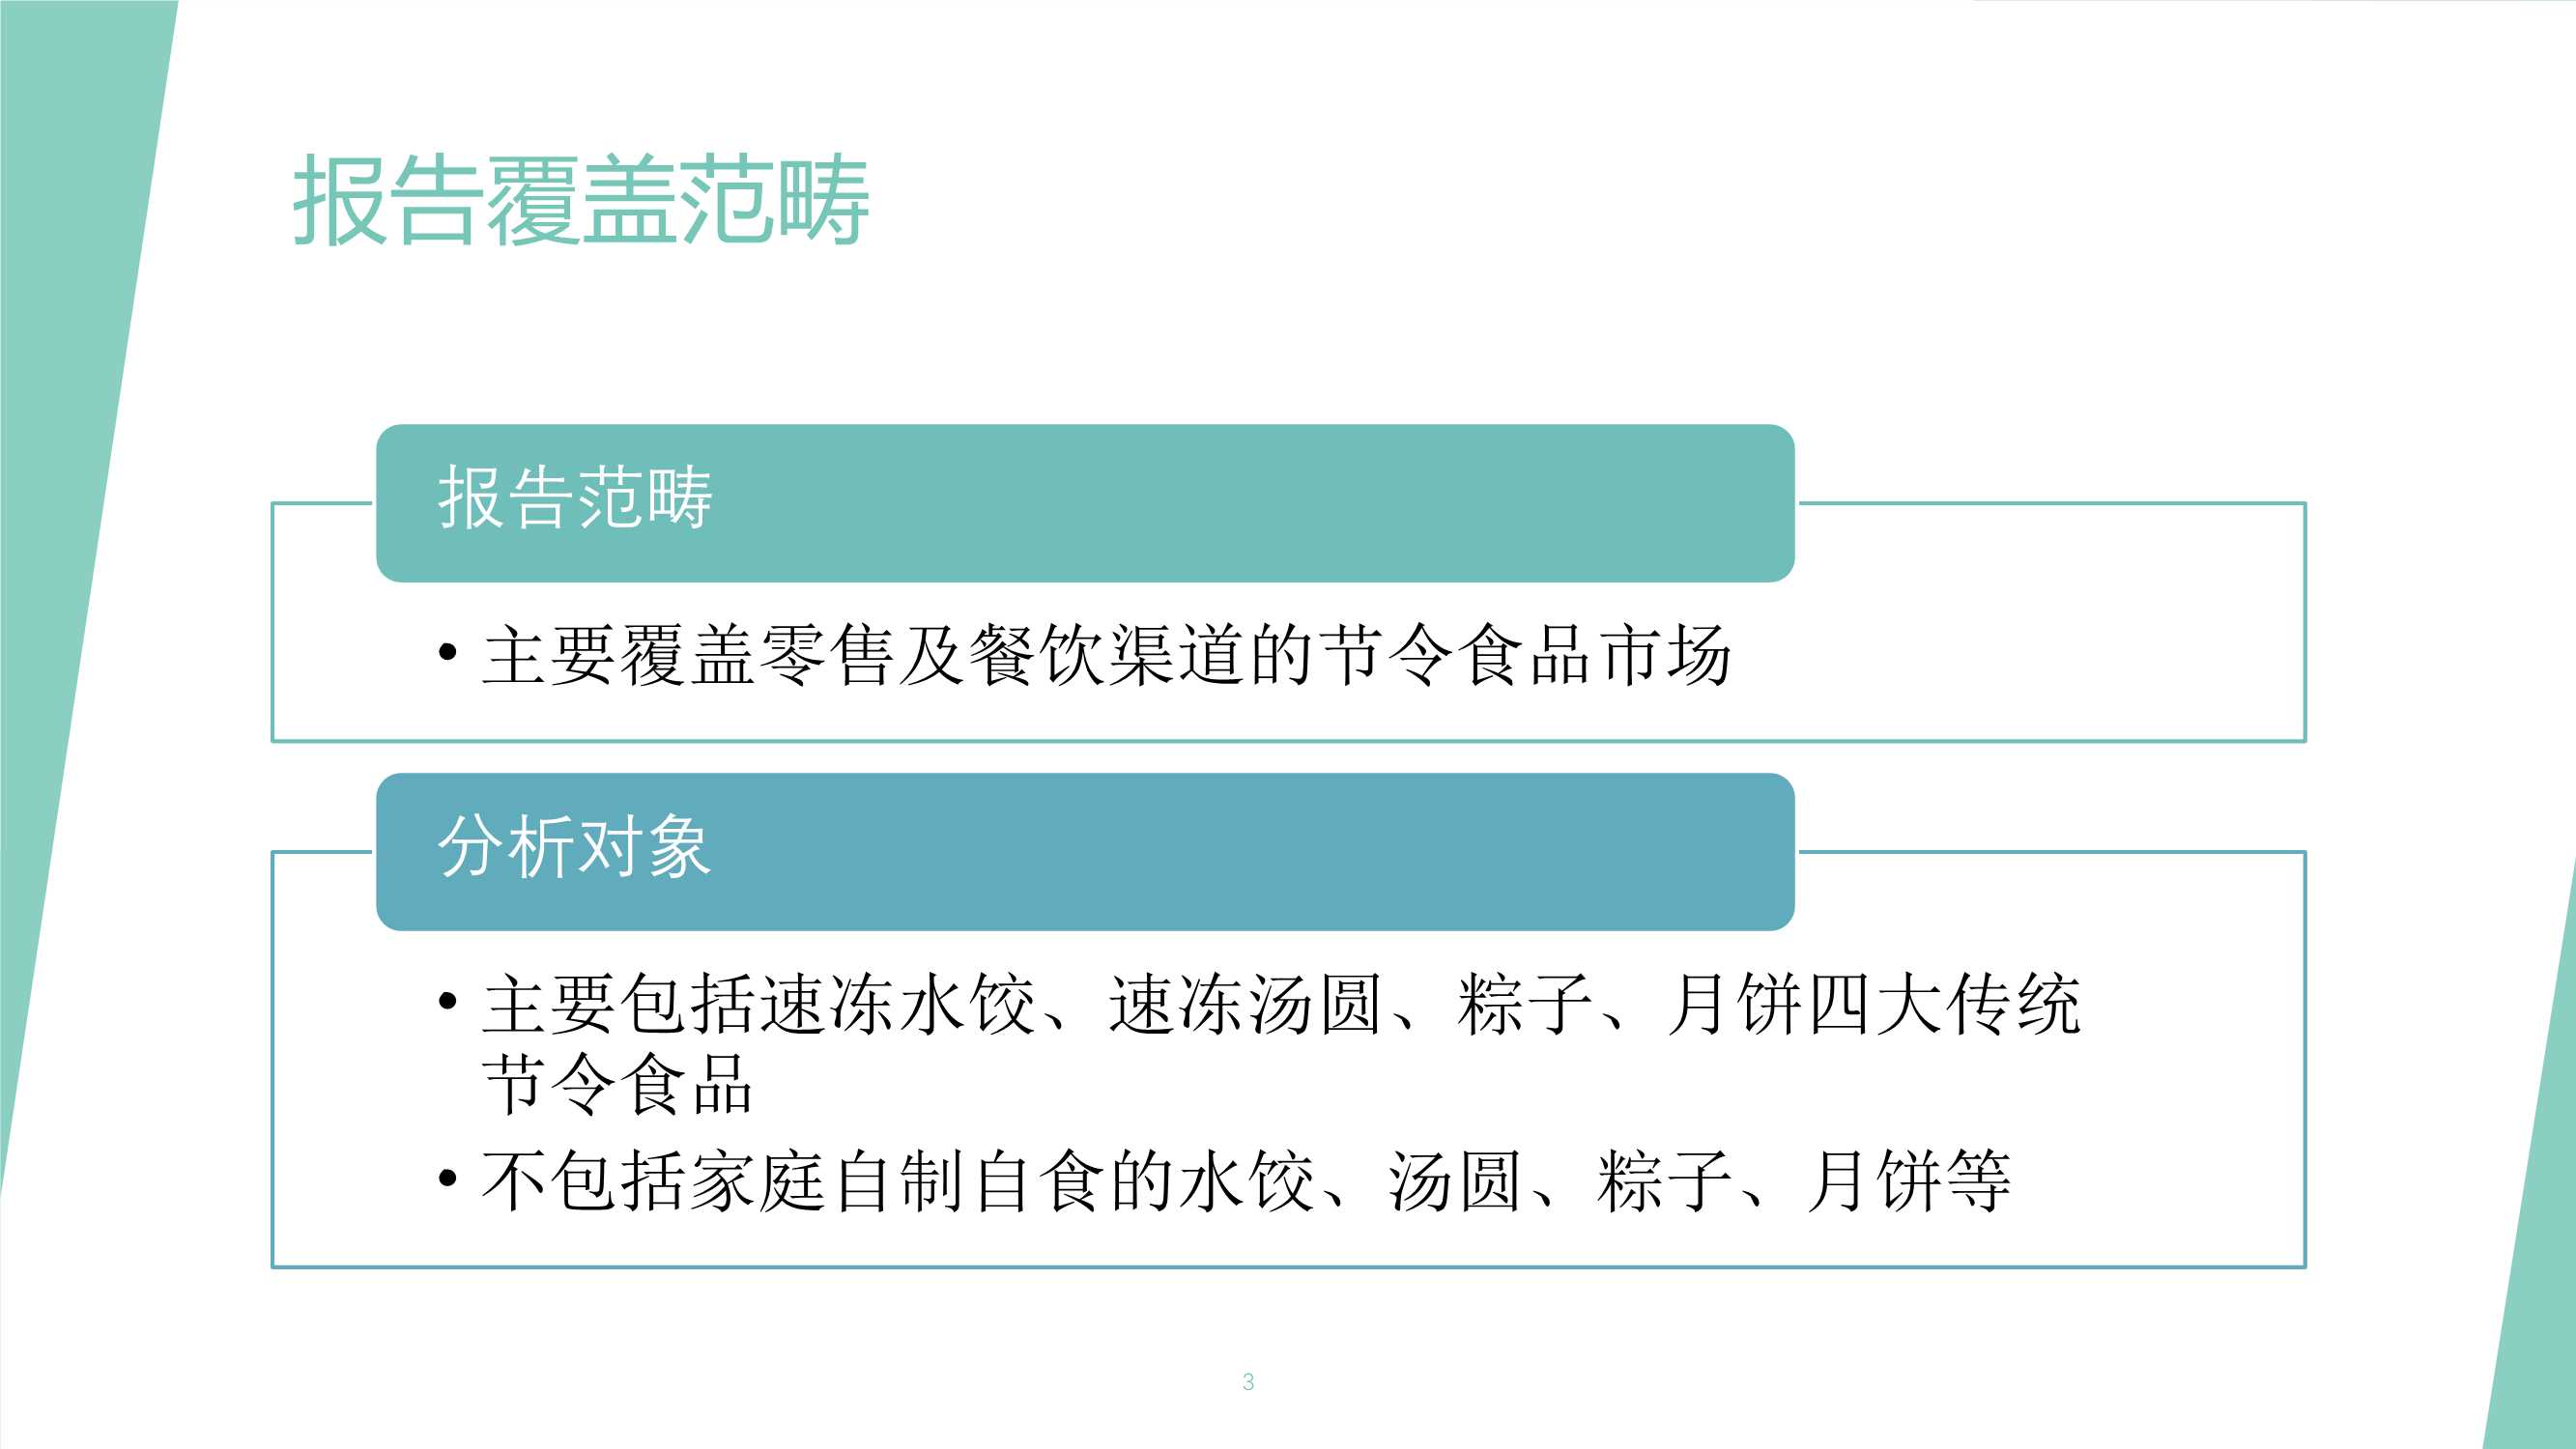 Uresearch-2021-2022年中国传统节令食品行业市场研究报告-2022.02-21页